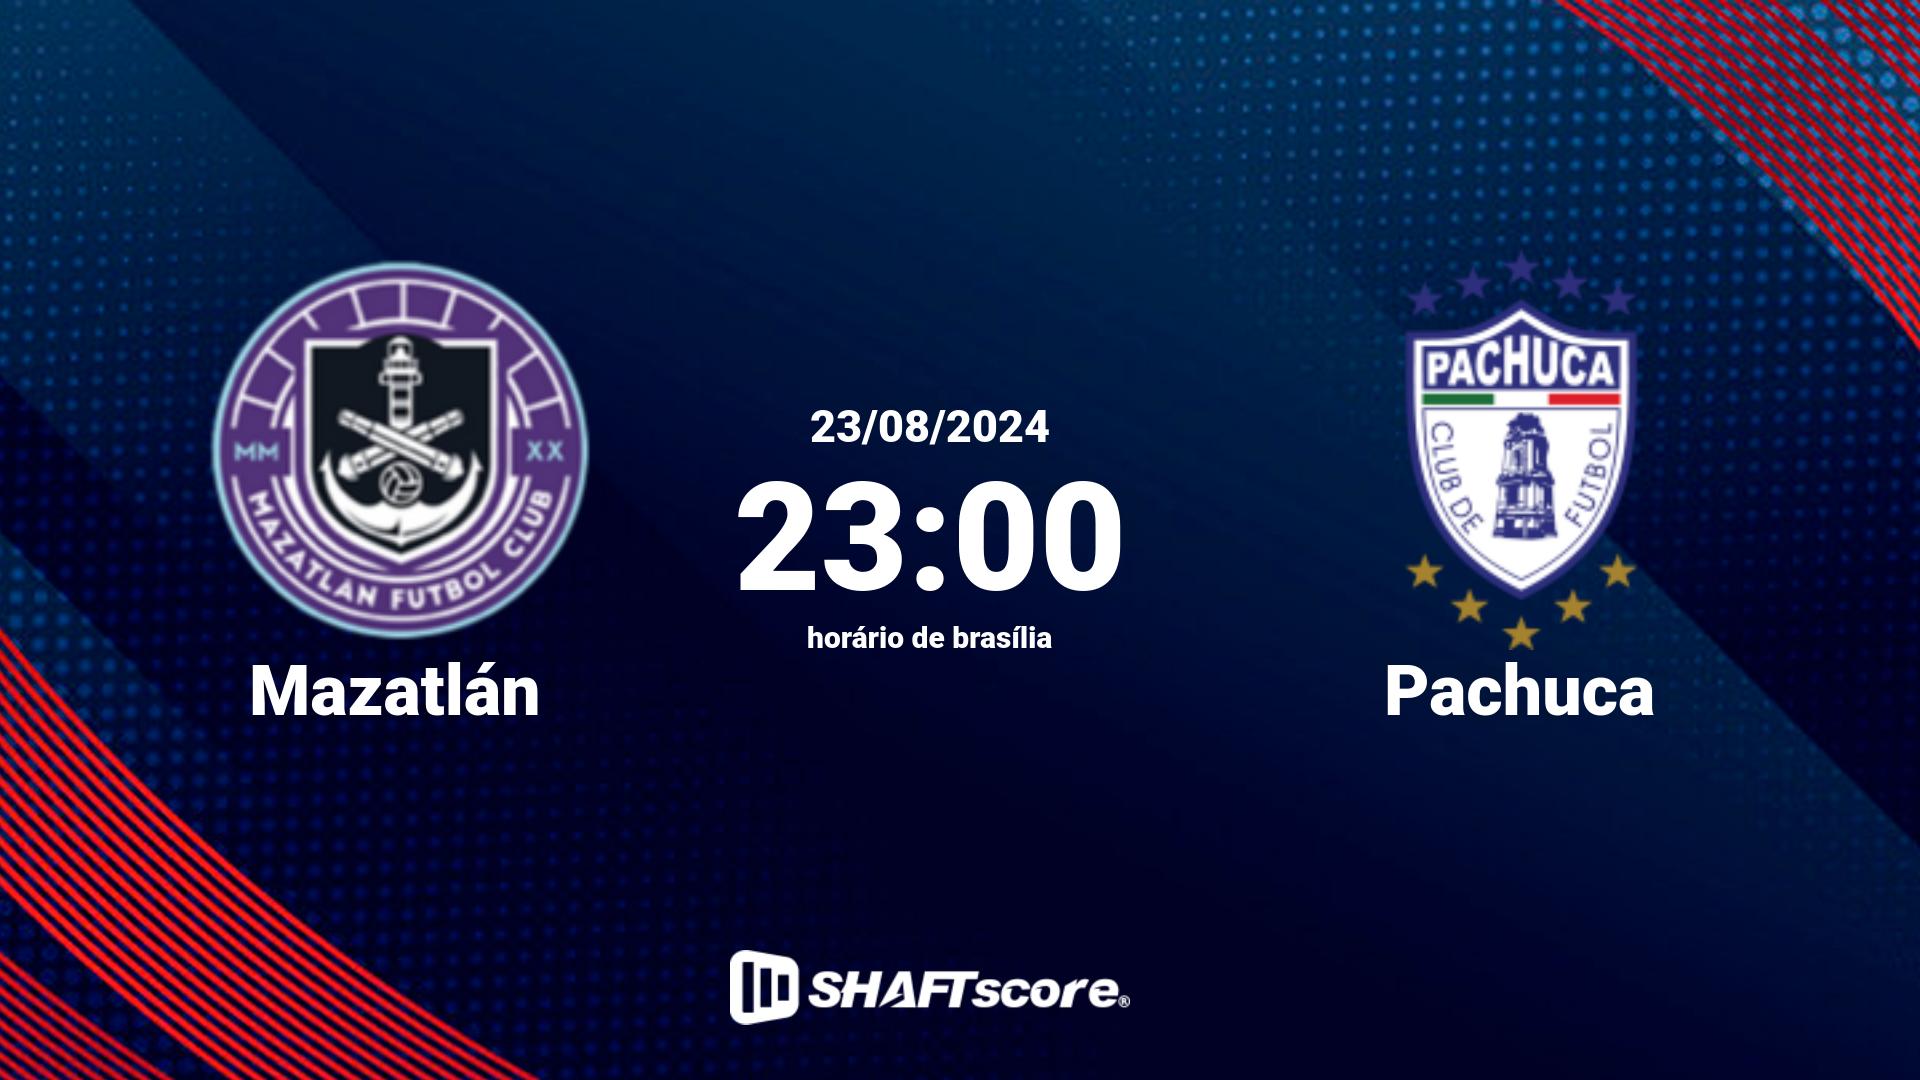 Estatísticas do jogo Mazatlán vs Pachuca 23.08 23:00